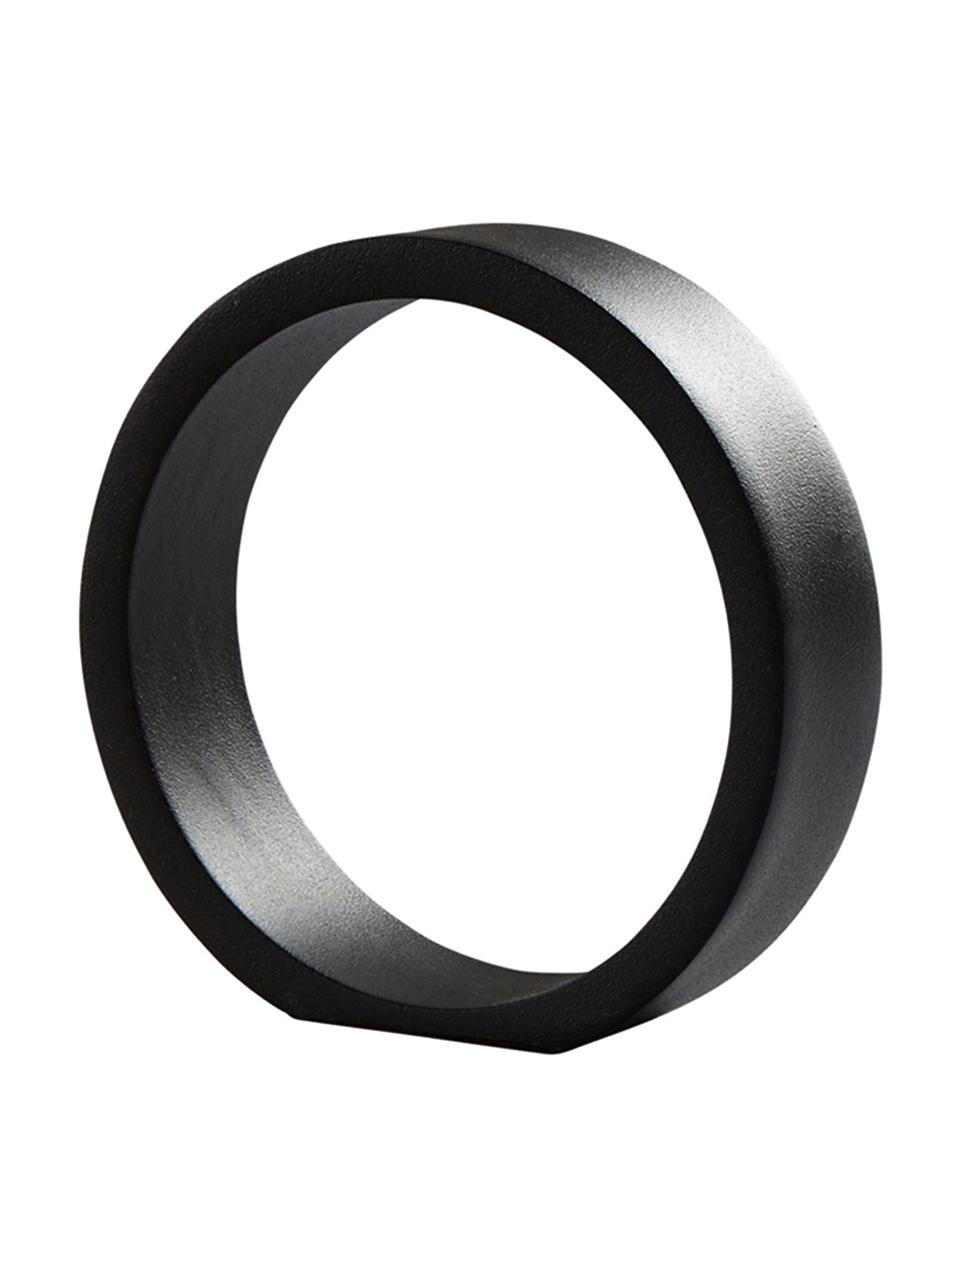 Deko-Objekt Ring, Aluminium, beschichtet, Schwarz, 14 x 14 cm